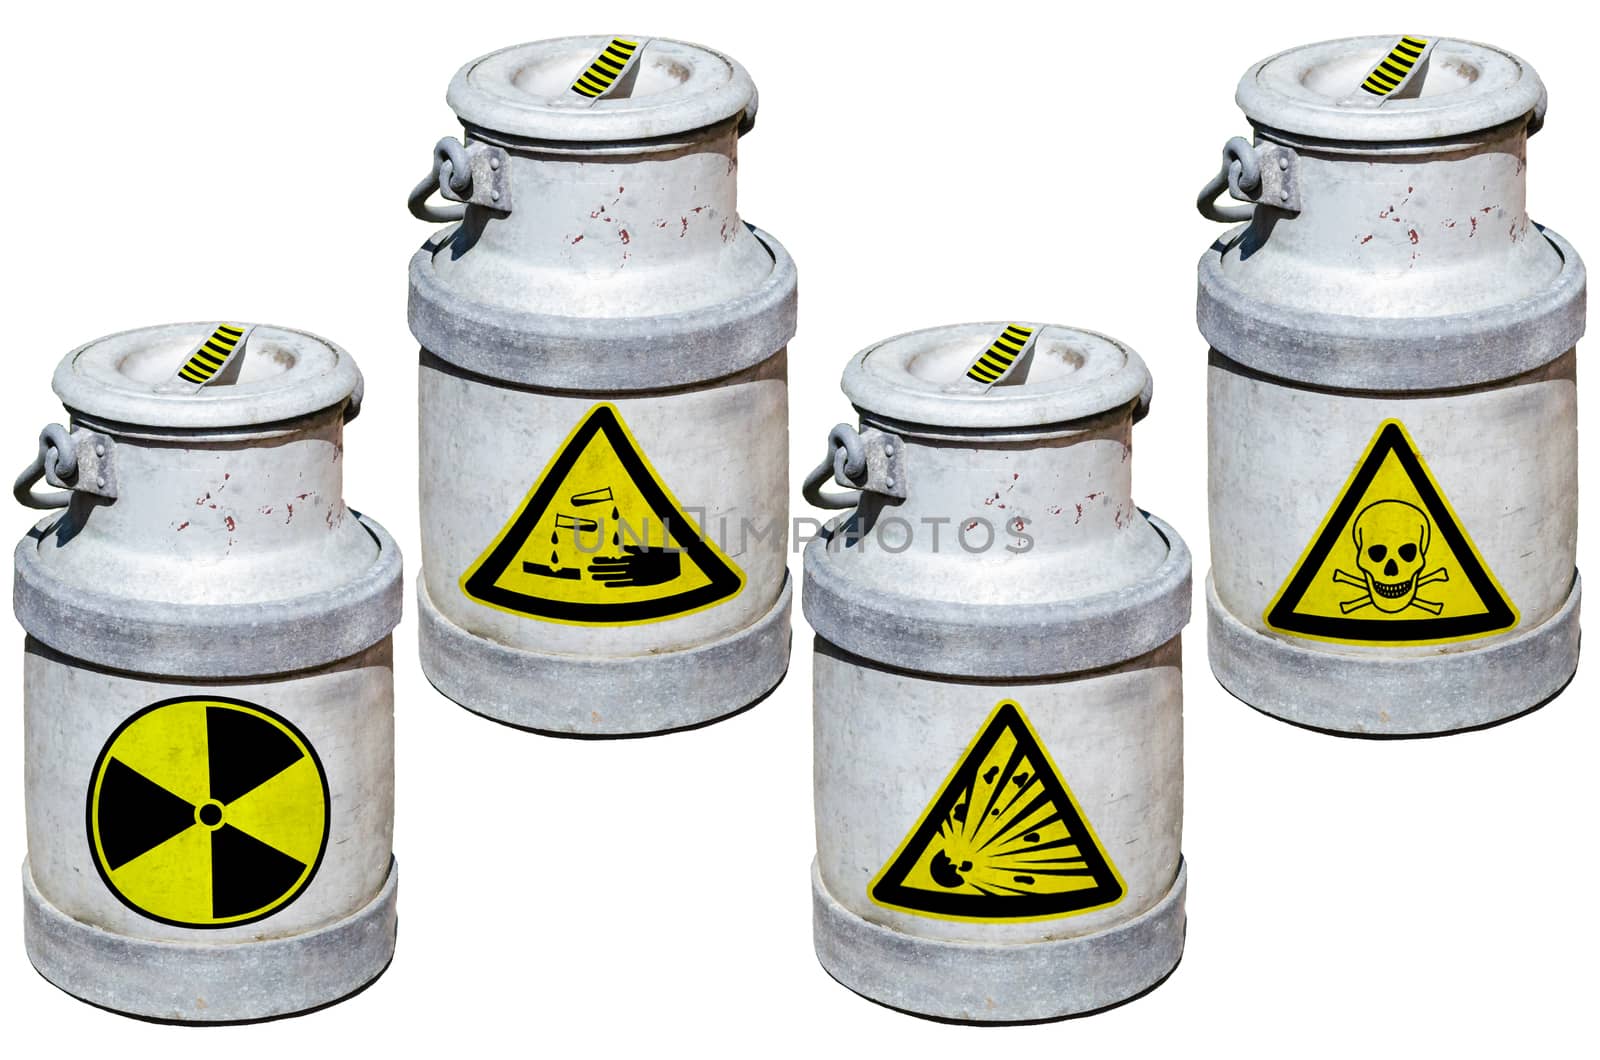 Four barrels with hazardous waste. Barrels marked by symbols.